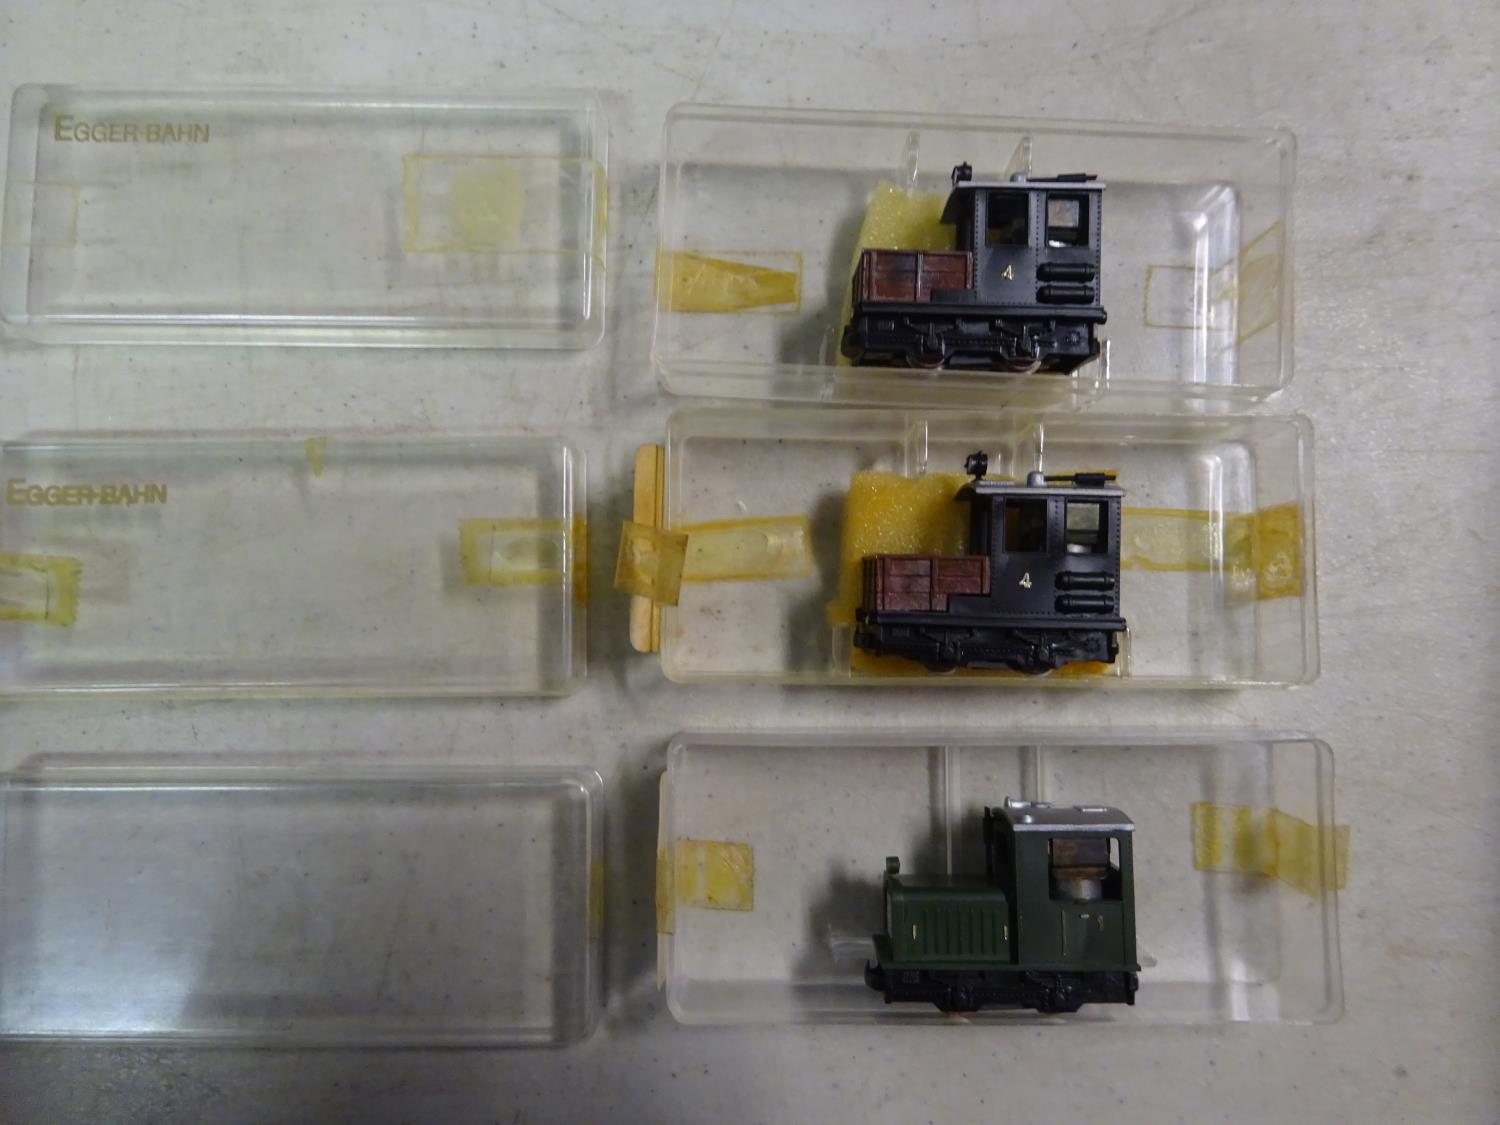 A quantity of HO/HOe Miniature gauge (N gauge) and HO gauge model railway by Egger-Bahn, Playcraft, - Image 9 of 9